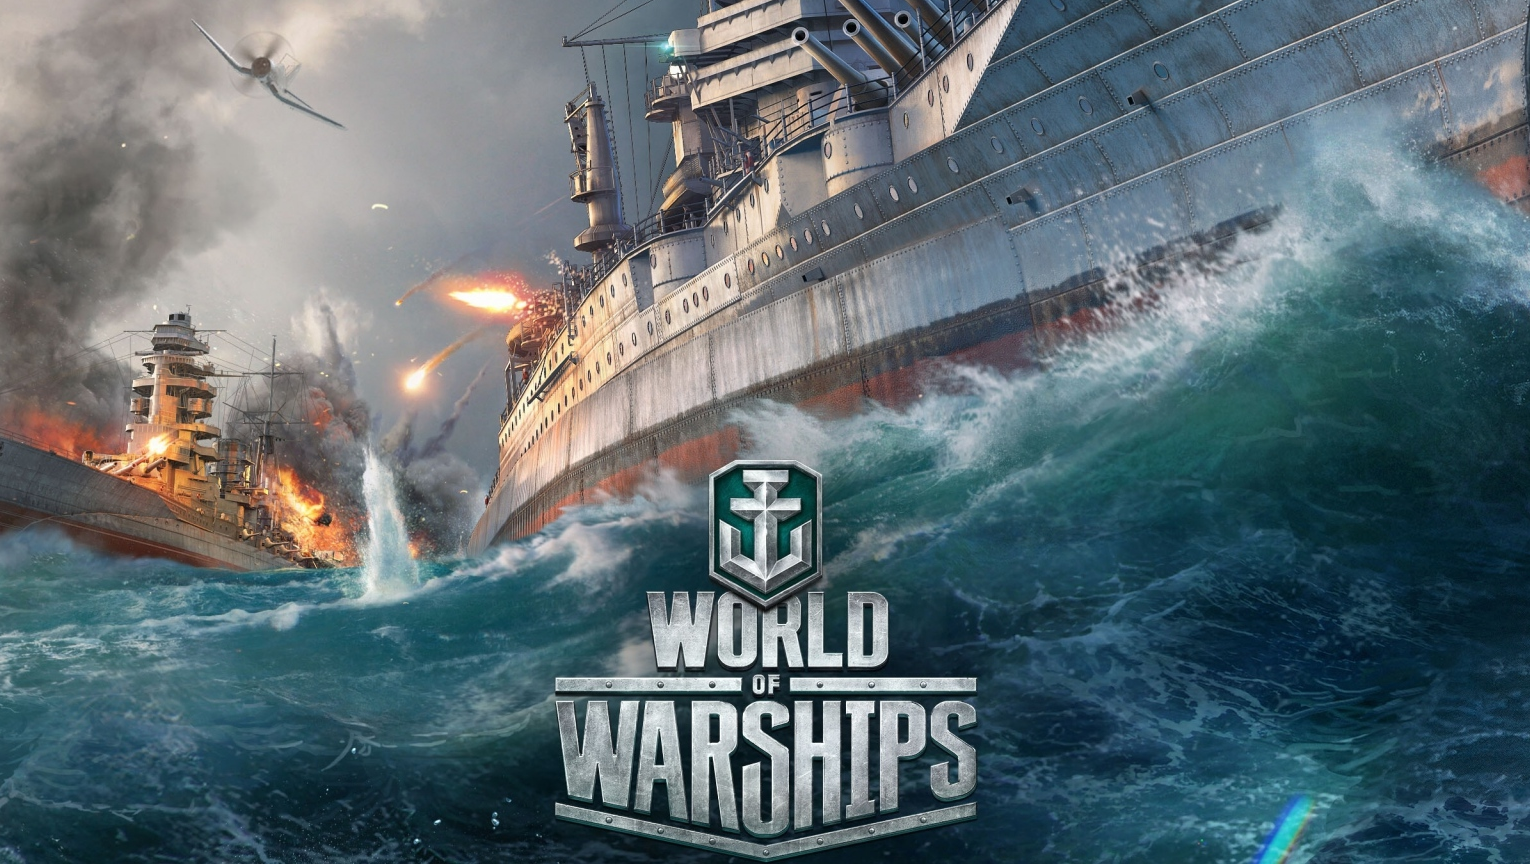 battleships games online free